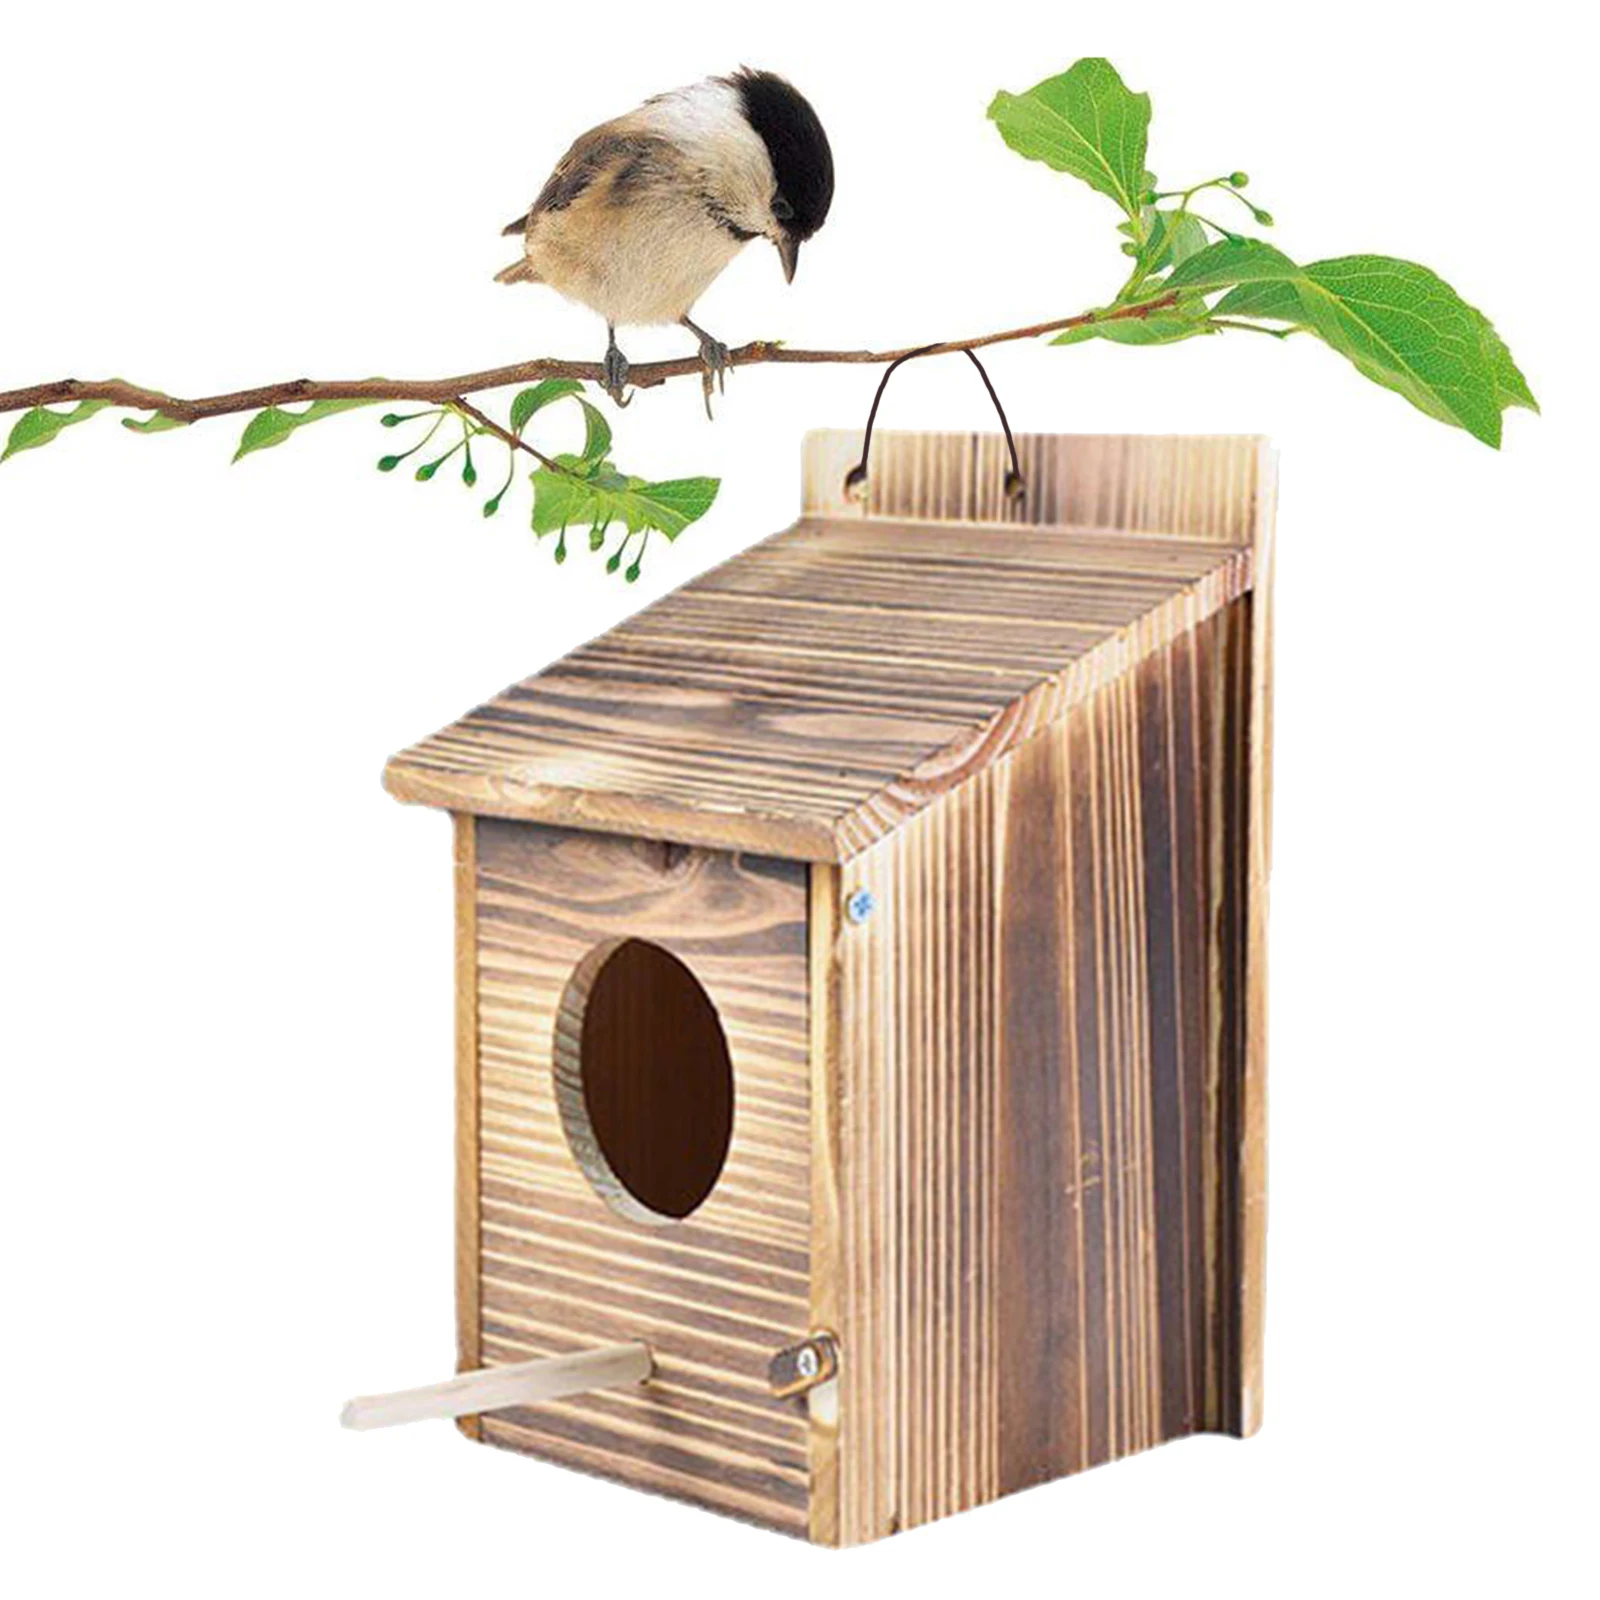 Wood Outdoor Garden Bird House Wall / Tree Mounted Bird Sleeping Nesting Hatching Hut Box